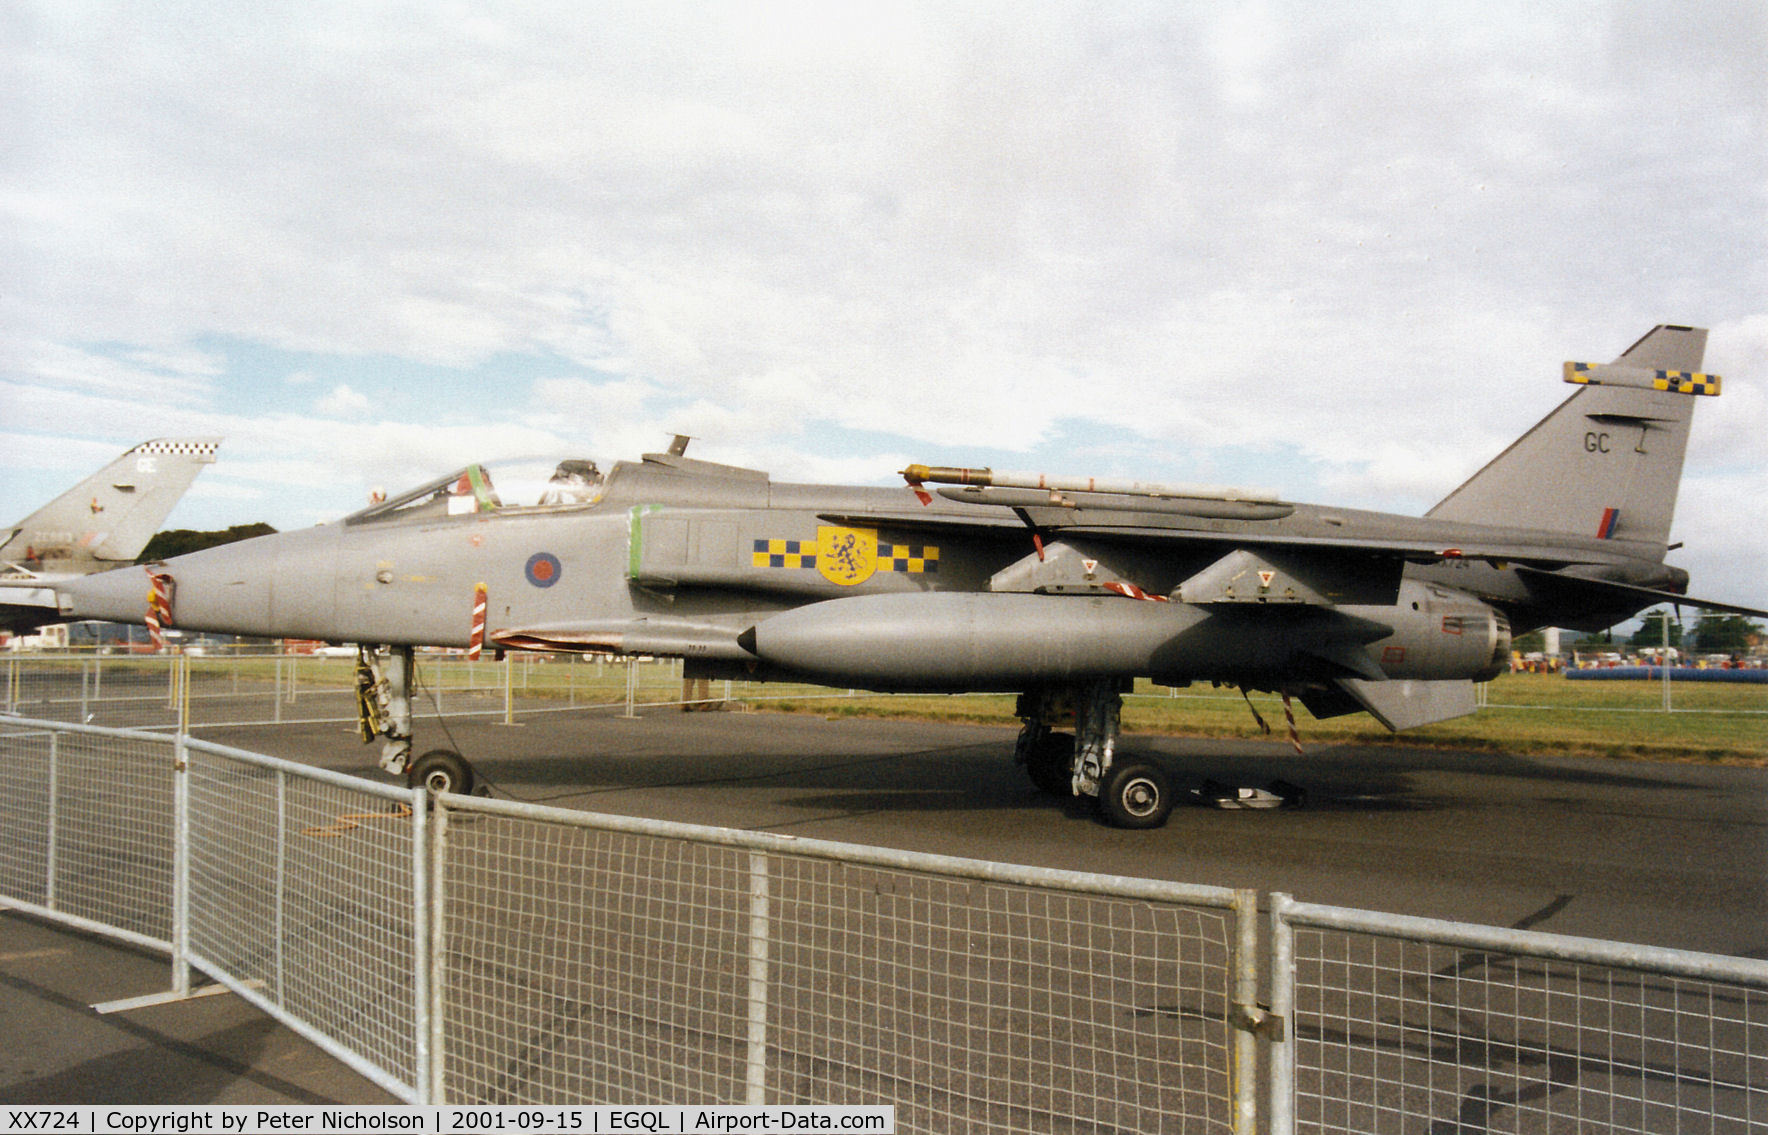 XX724, 1974 Sepecat Jaguar GR.3A C/N S.21, Jaguar GR.3A, callsign Blackcat 4, of 54 Squadron at RAF Coltishall on display at the 2001 RAF Leuchars Airshow.